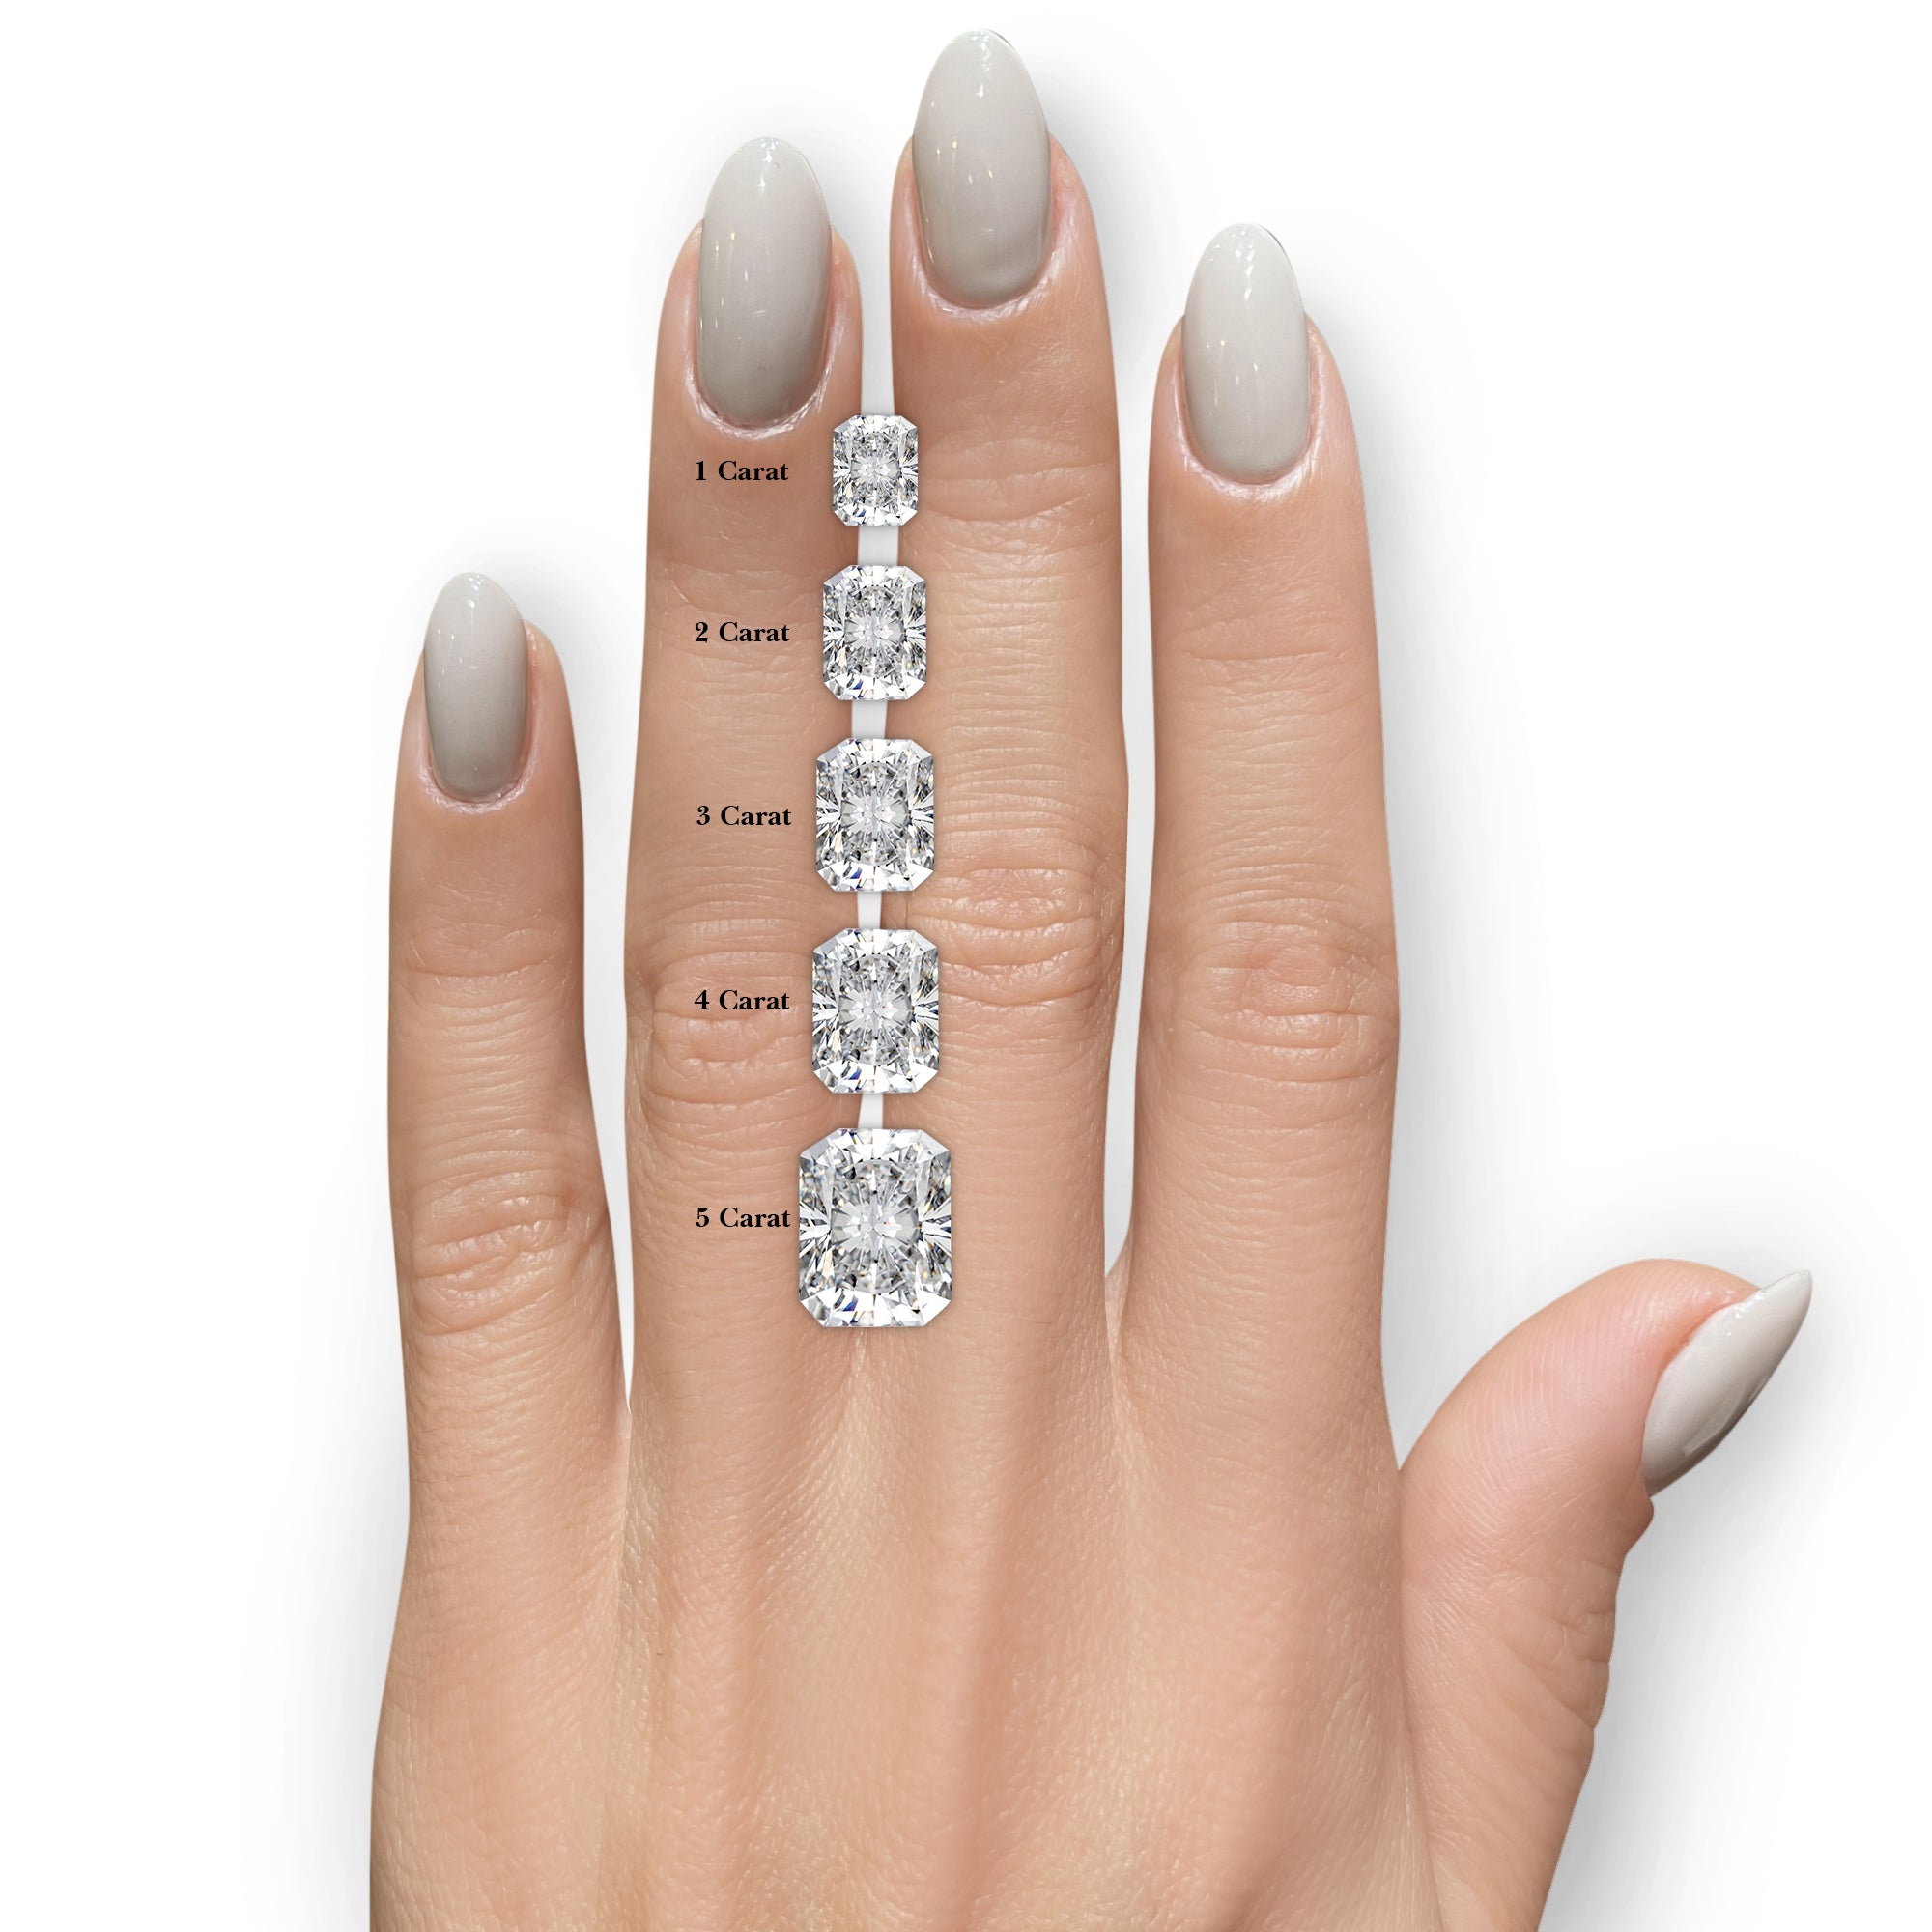 Deborah Diamond Engagement Ring -Platinum